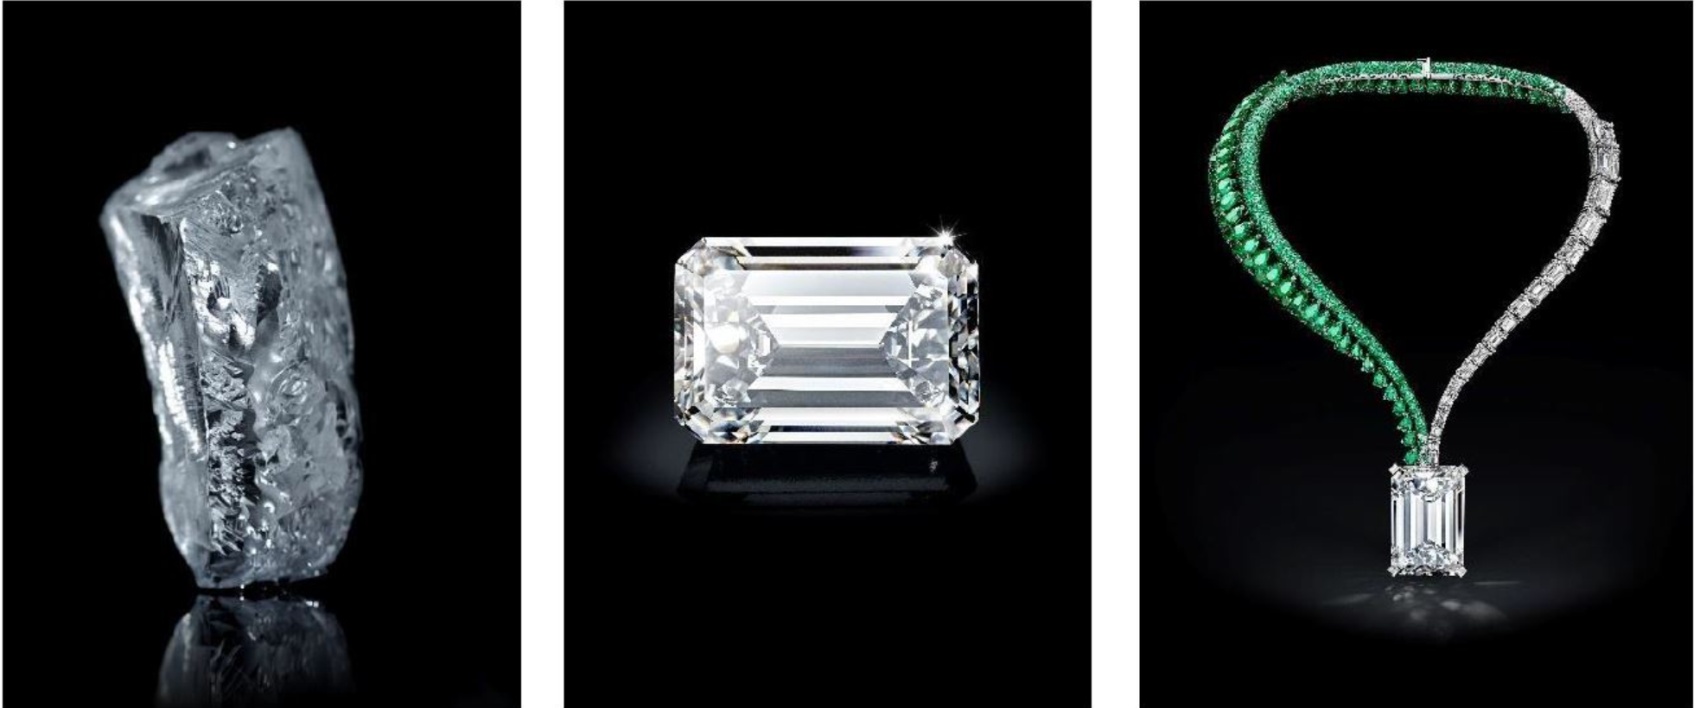 Is This The Most Beautiful Diamond? The De Grisogono Diamond.